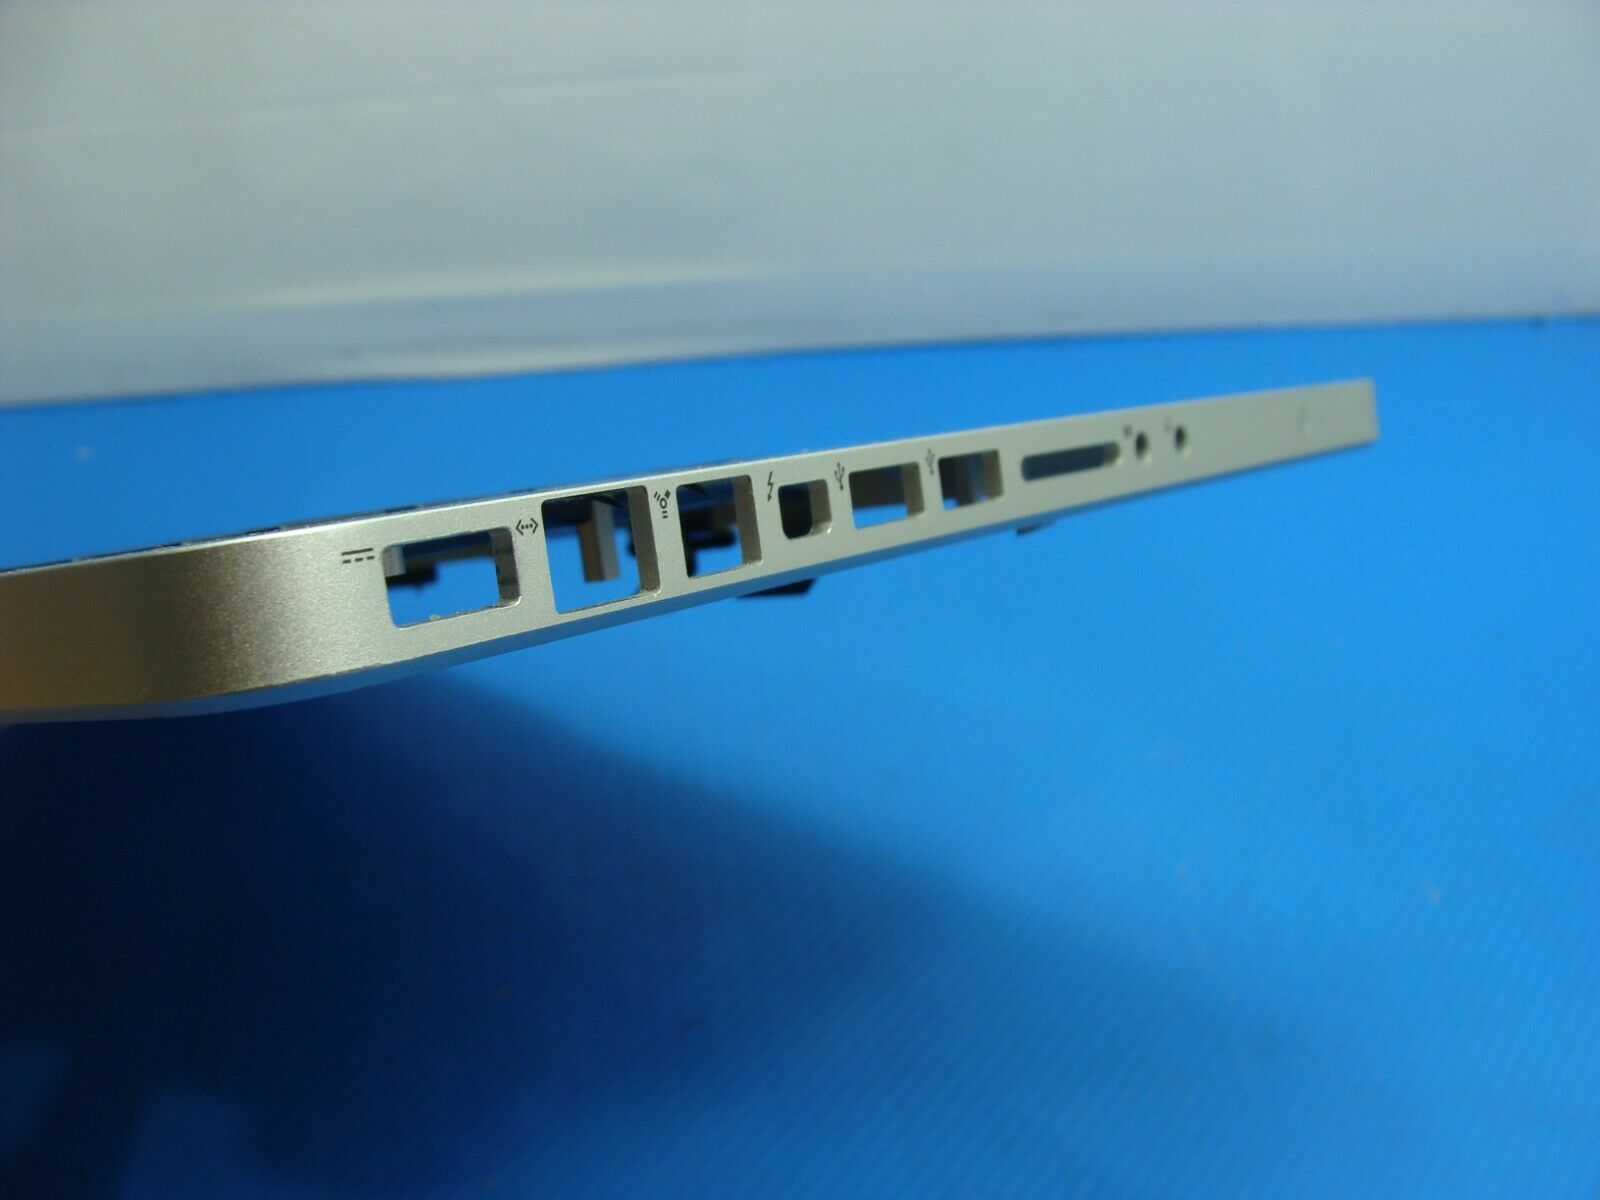 MacBook Pro A1286 MC721LL/A Early 2011 15